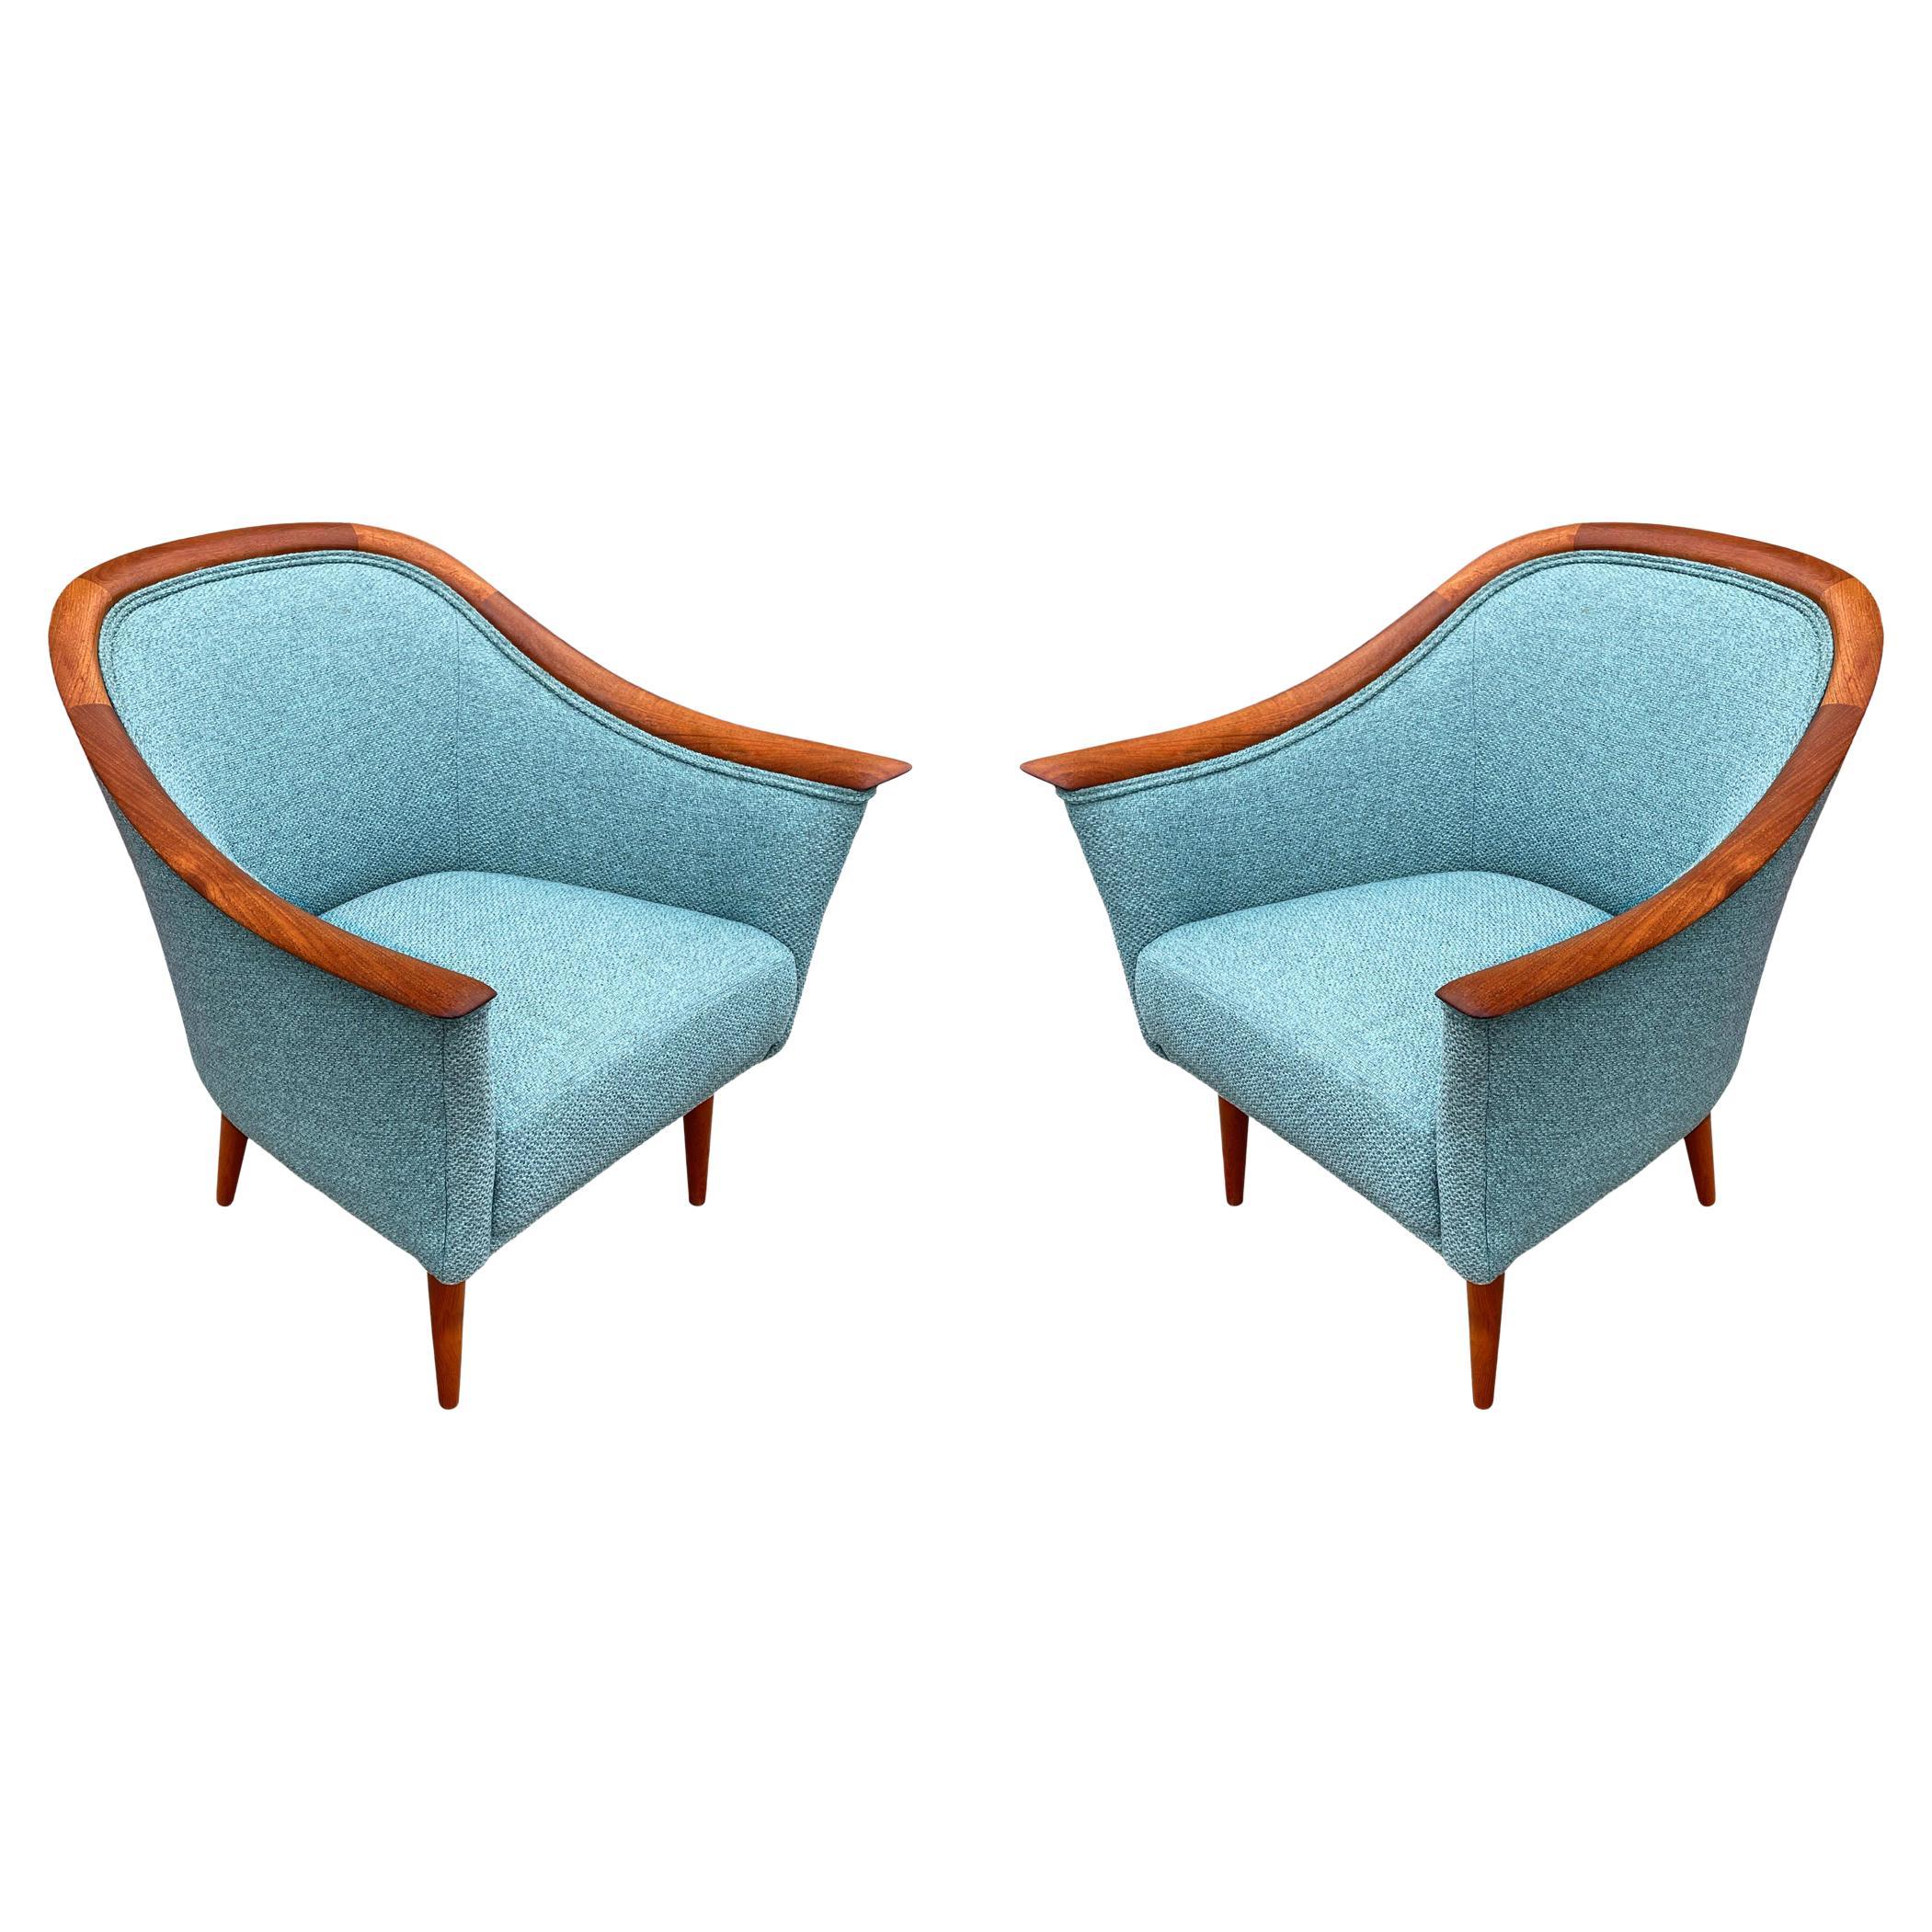 Matching Pair of Mid Century Danish Modern Lounge Chairs in Teak & Sage Tweed